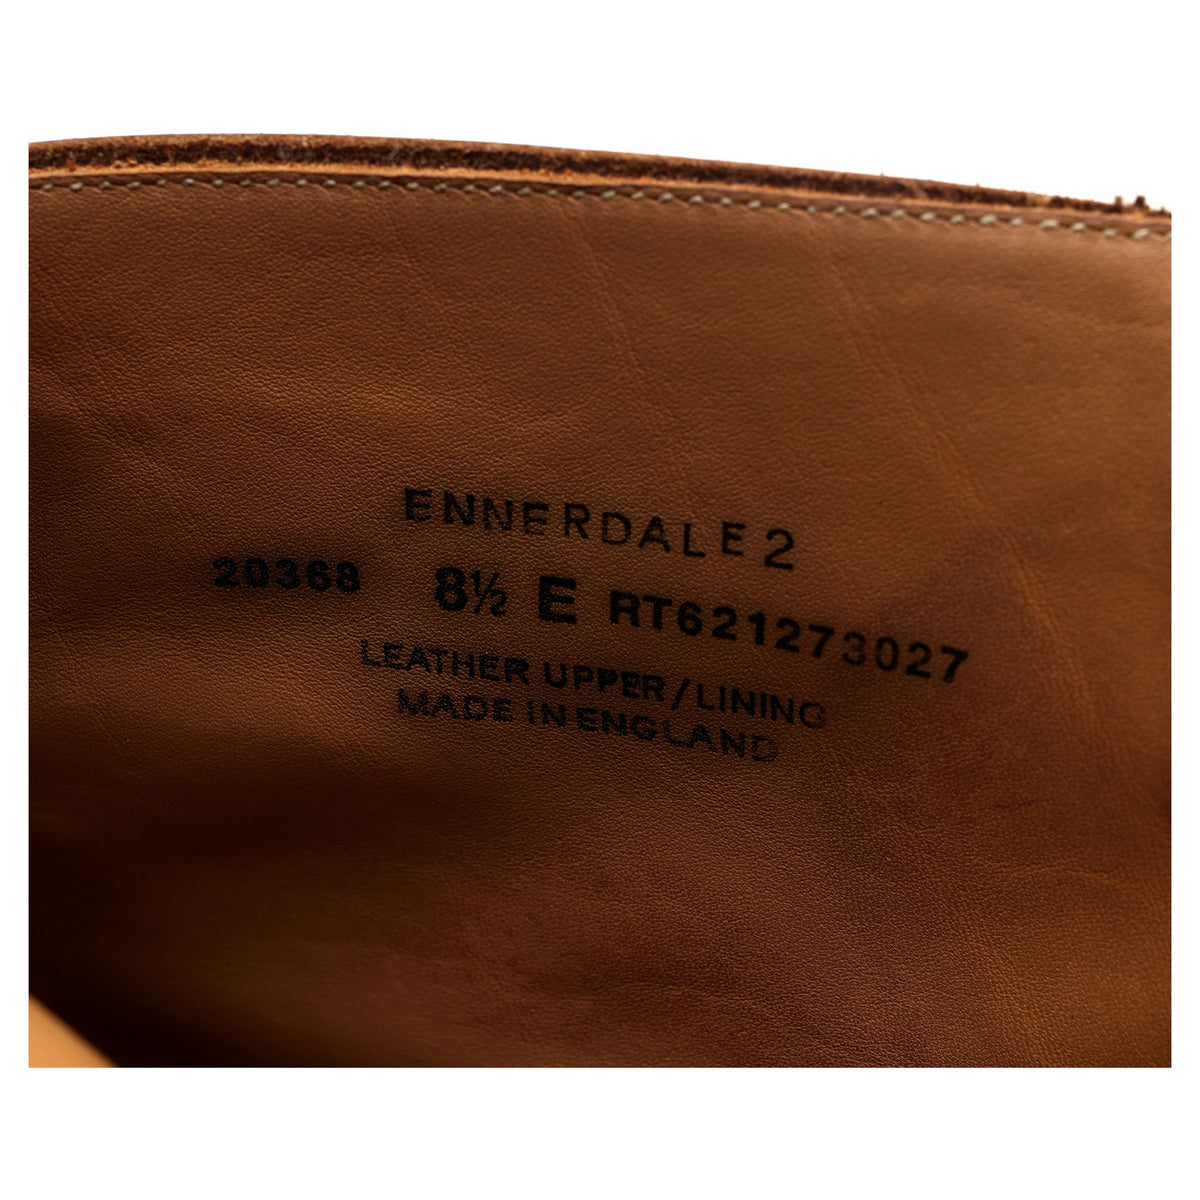 &#39;Ennerdale 2&#39; Brown Leather Split Toe Boots UK 8.5 E